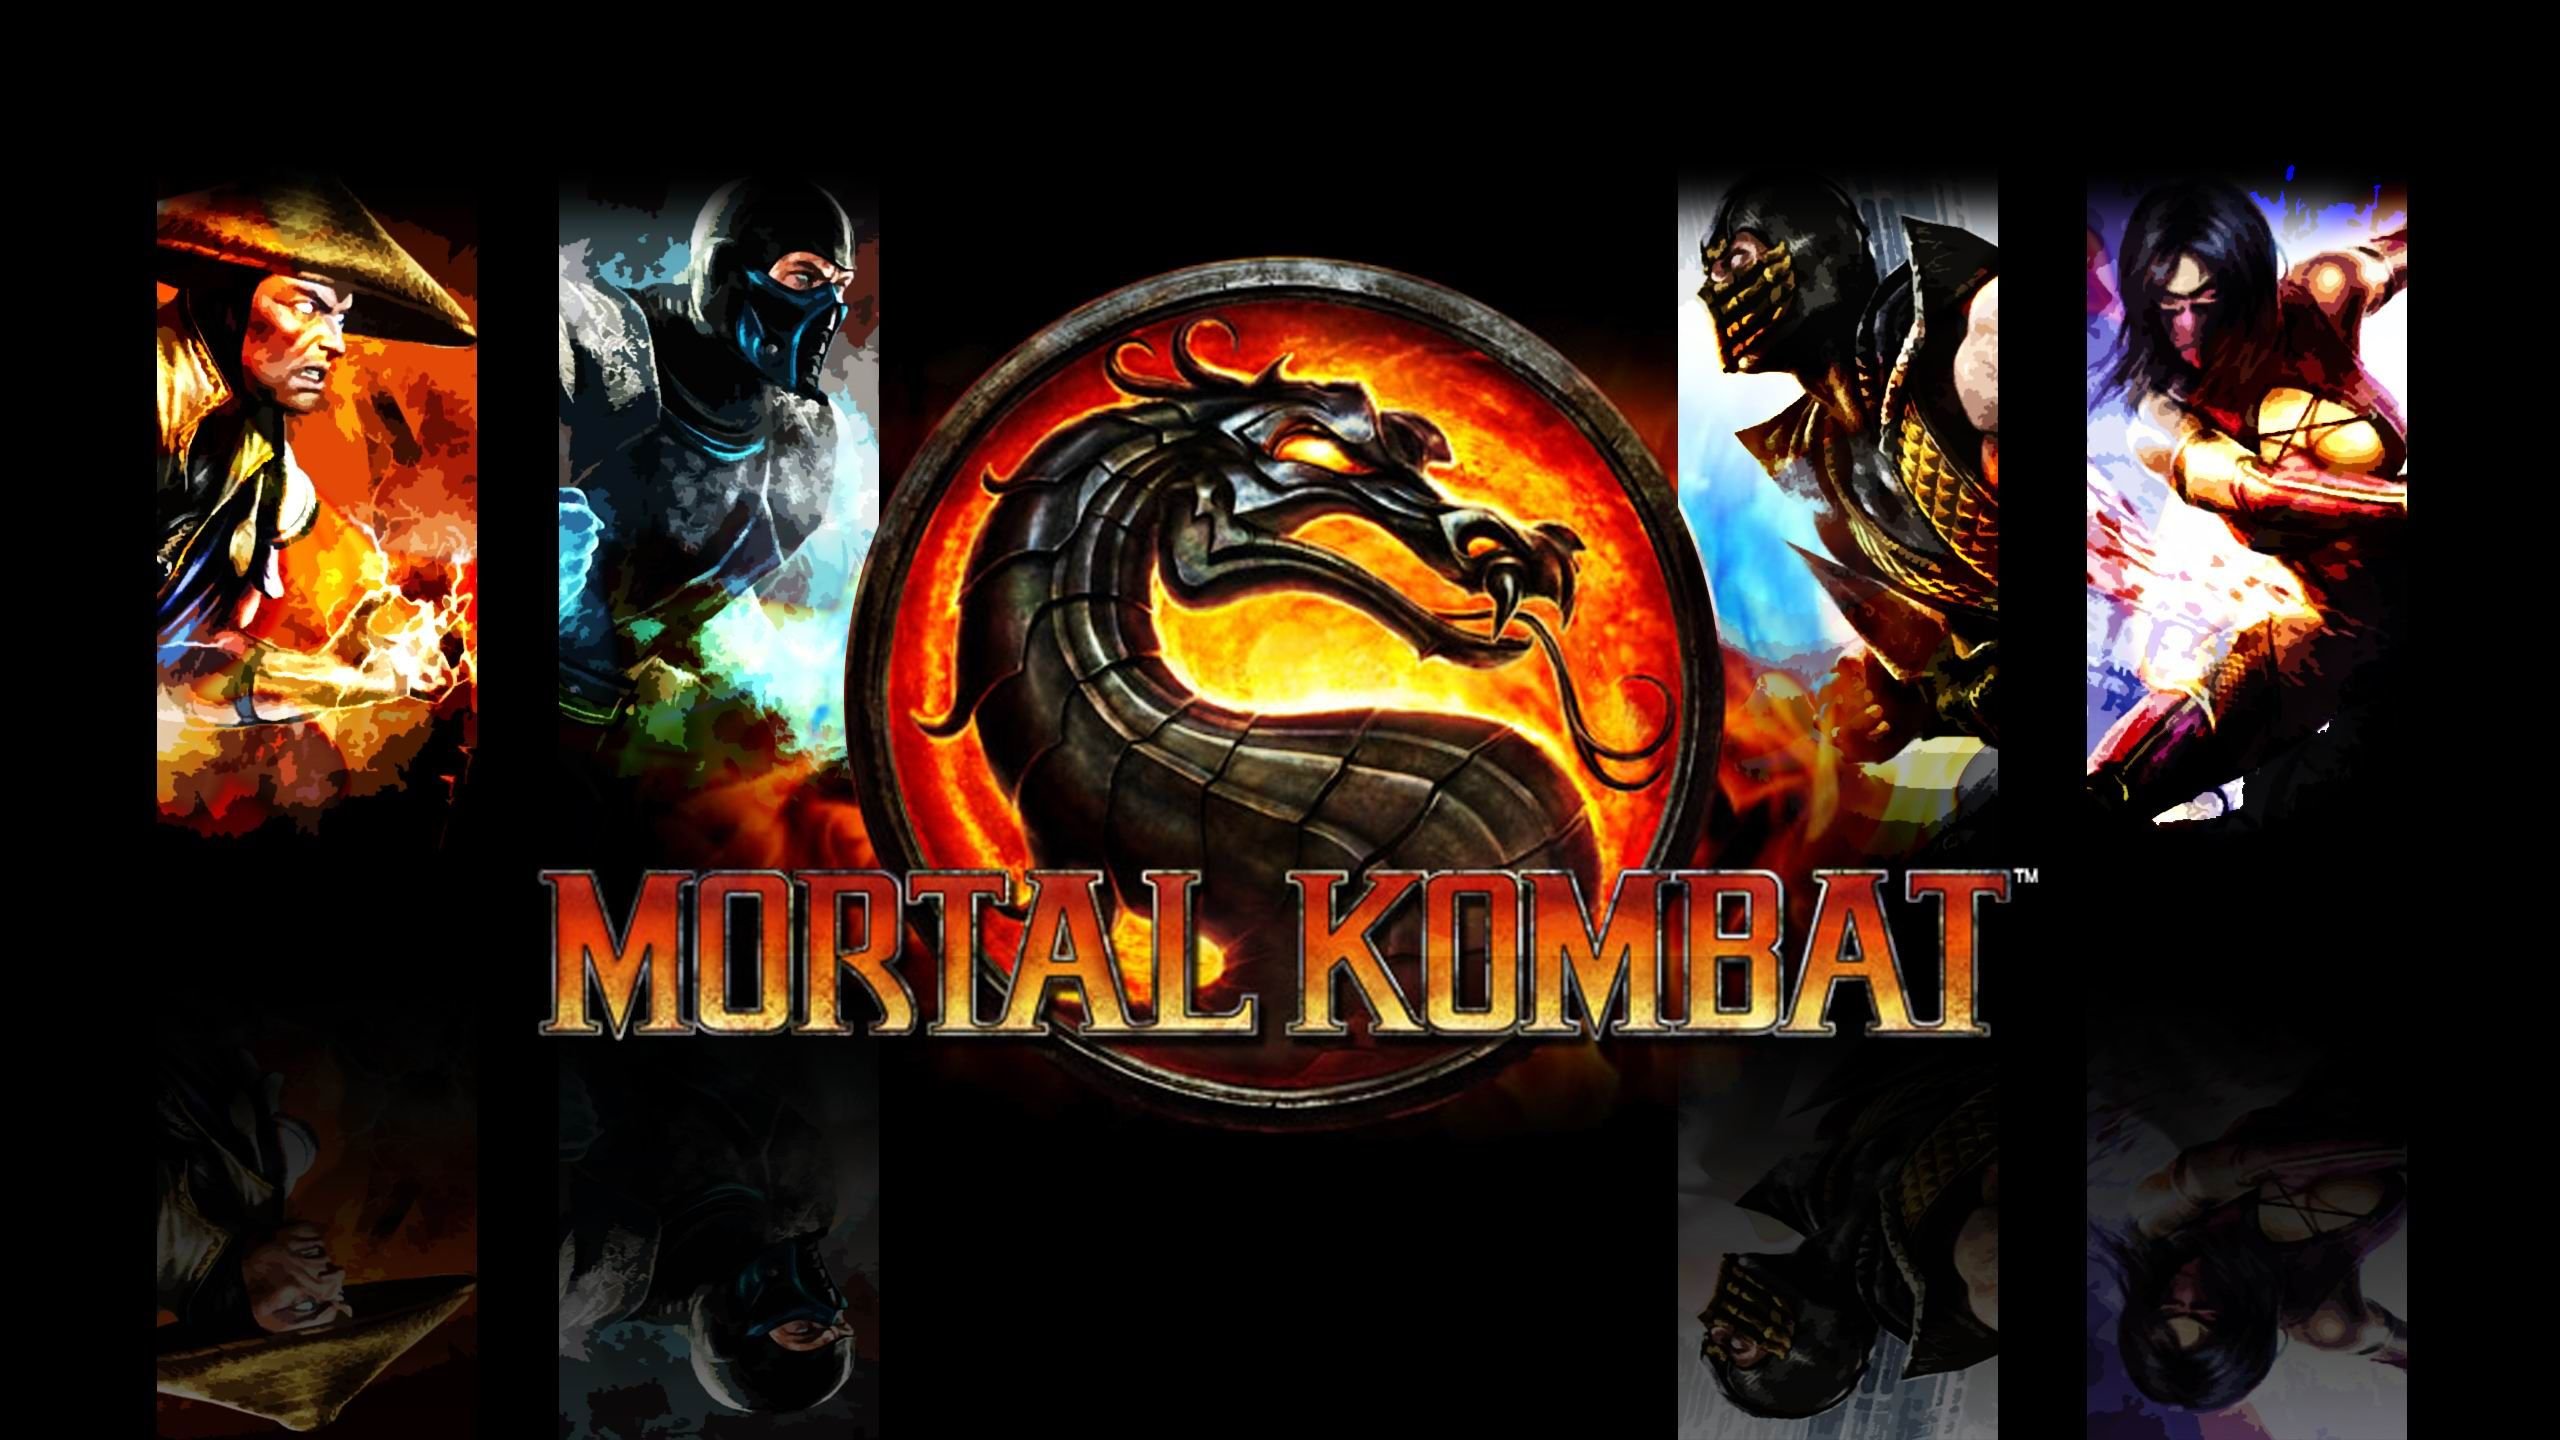  download Mortal Kombat Exclusive HD Wallpapers 4081 2560x1440